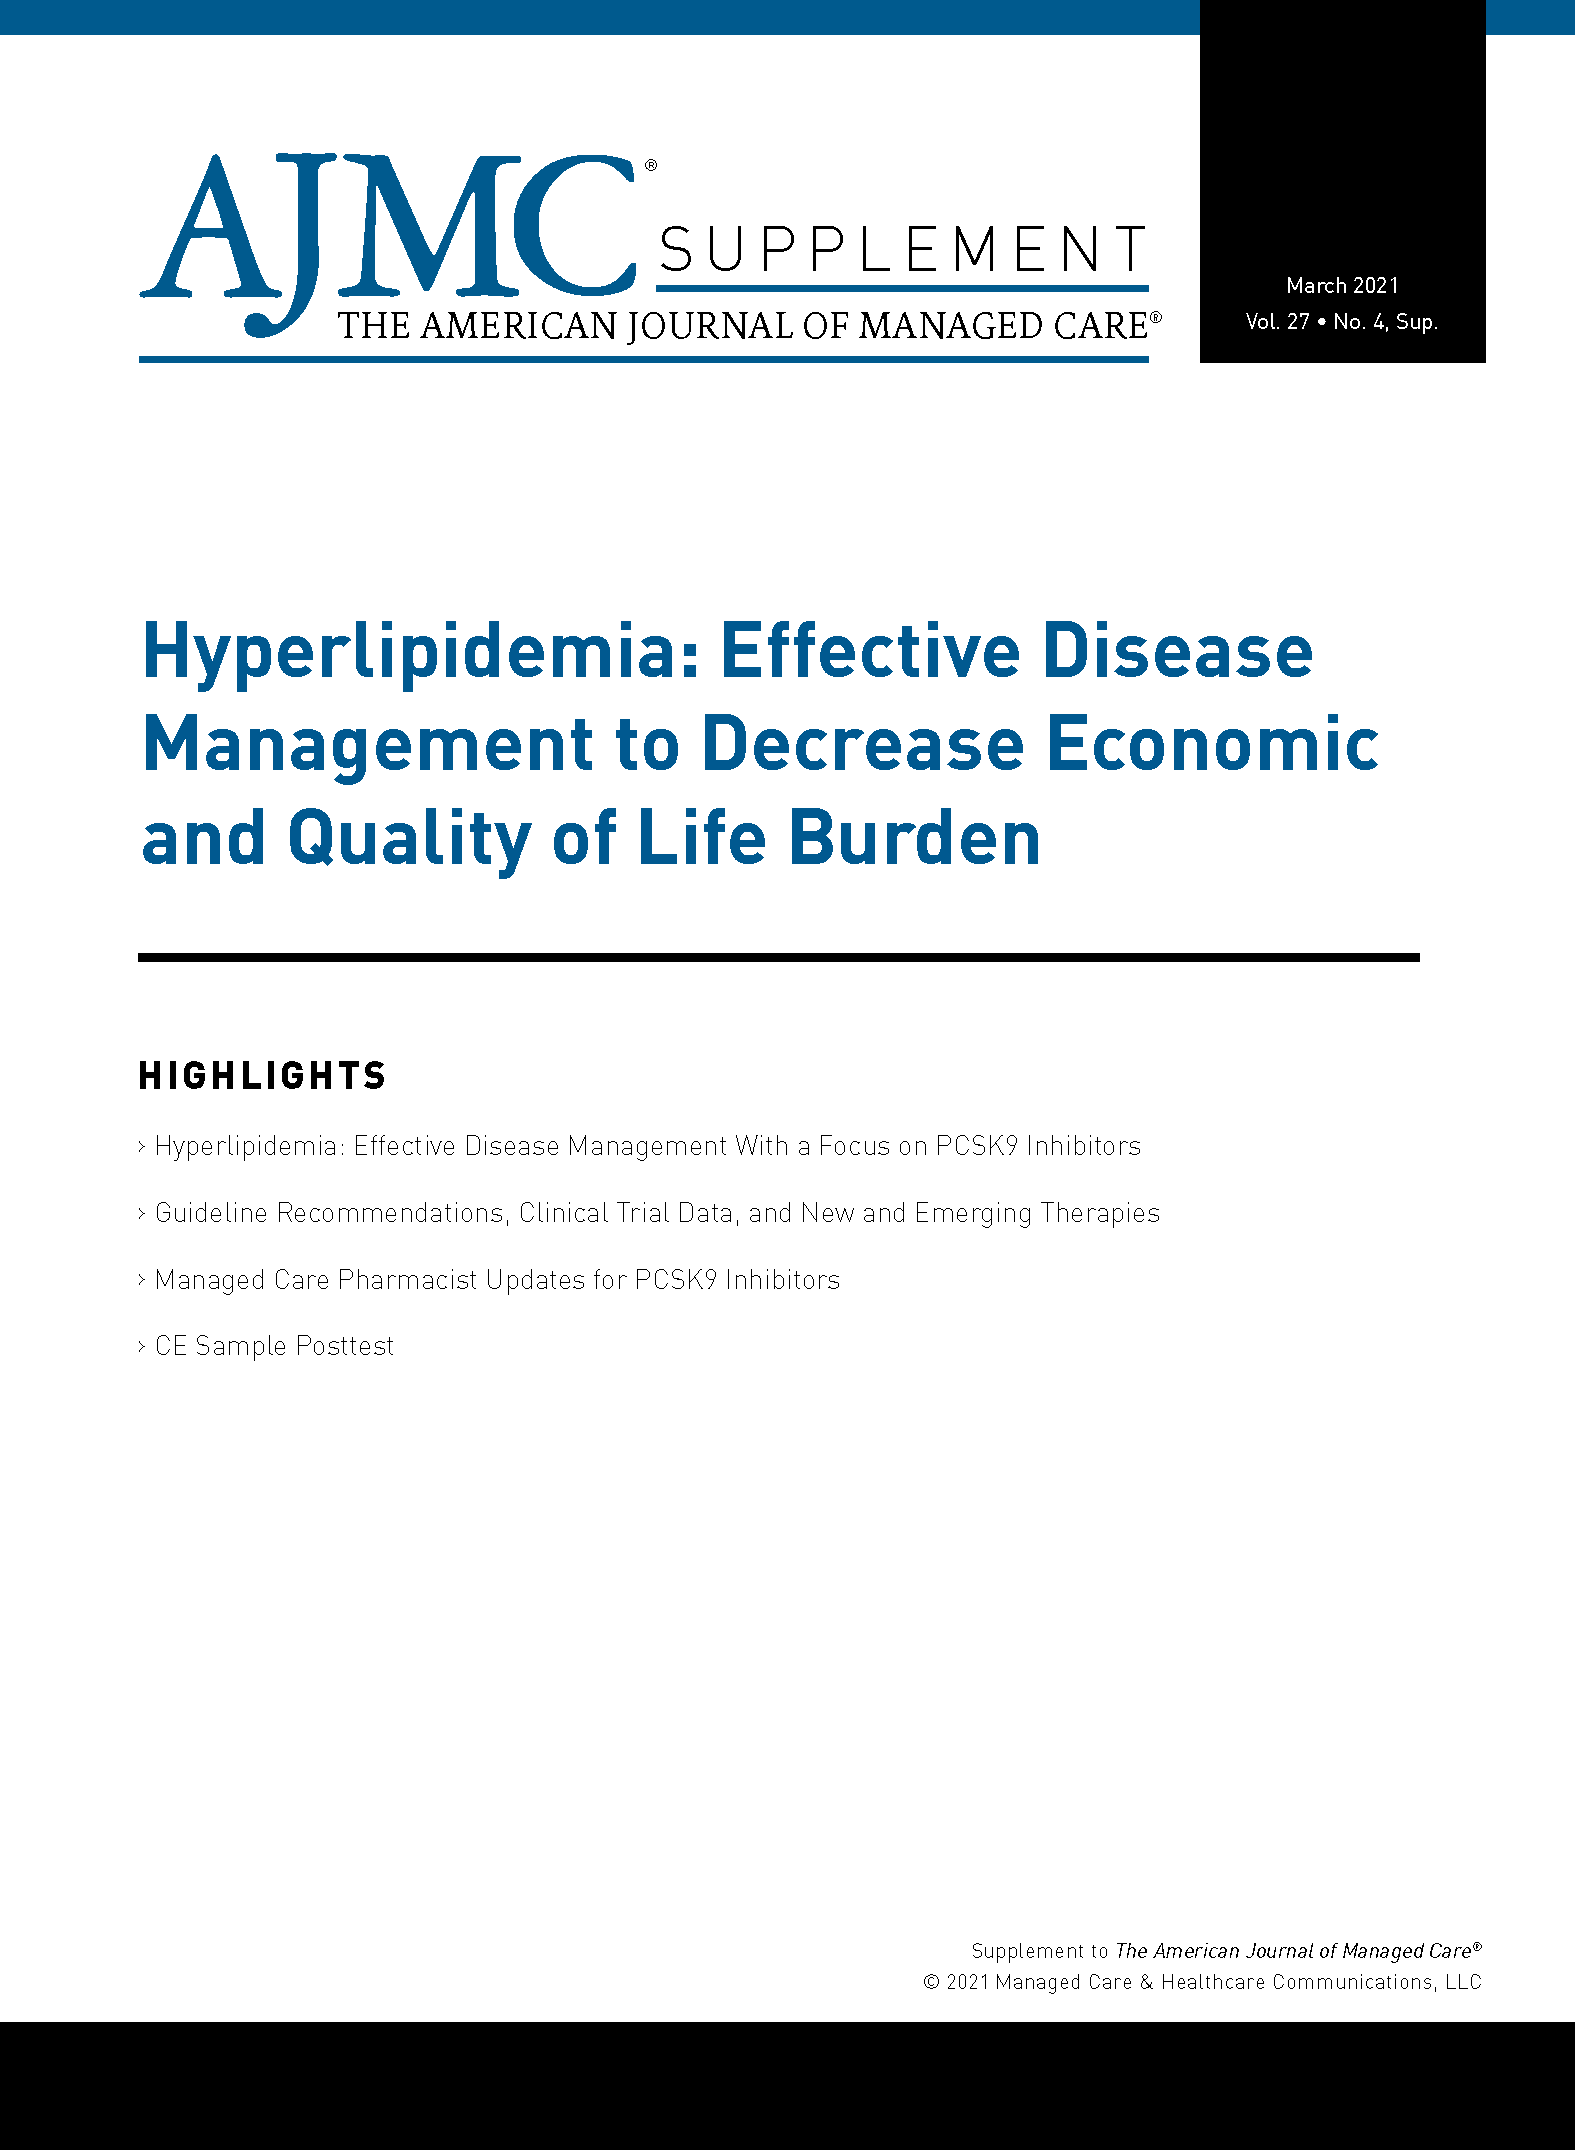 Hyperlipidemia: Effective Disease Management to Decrease Economic and Quality of Life Burden